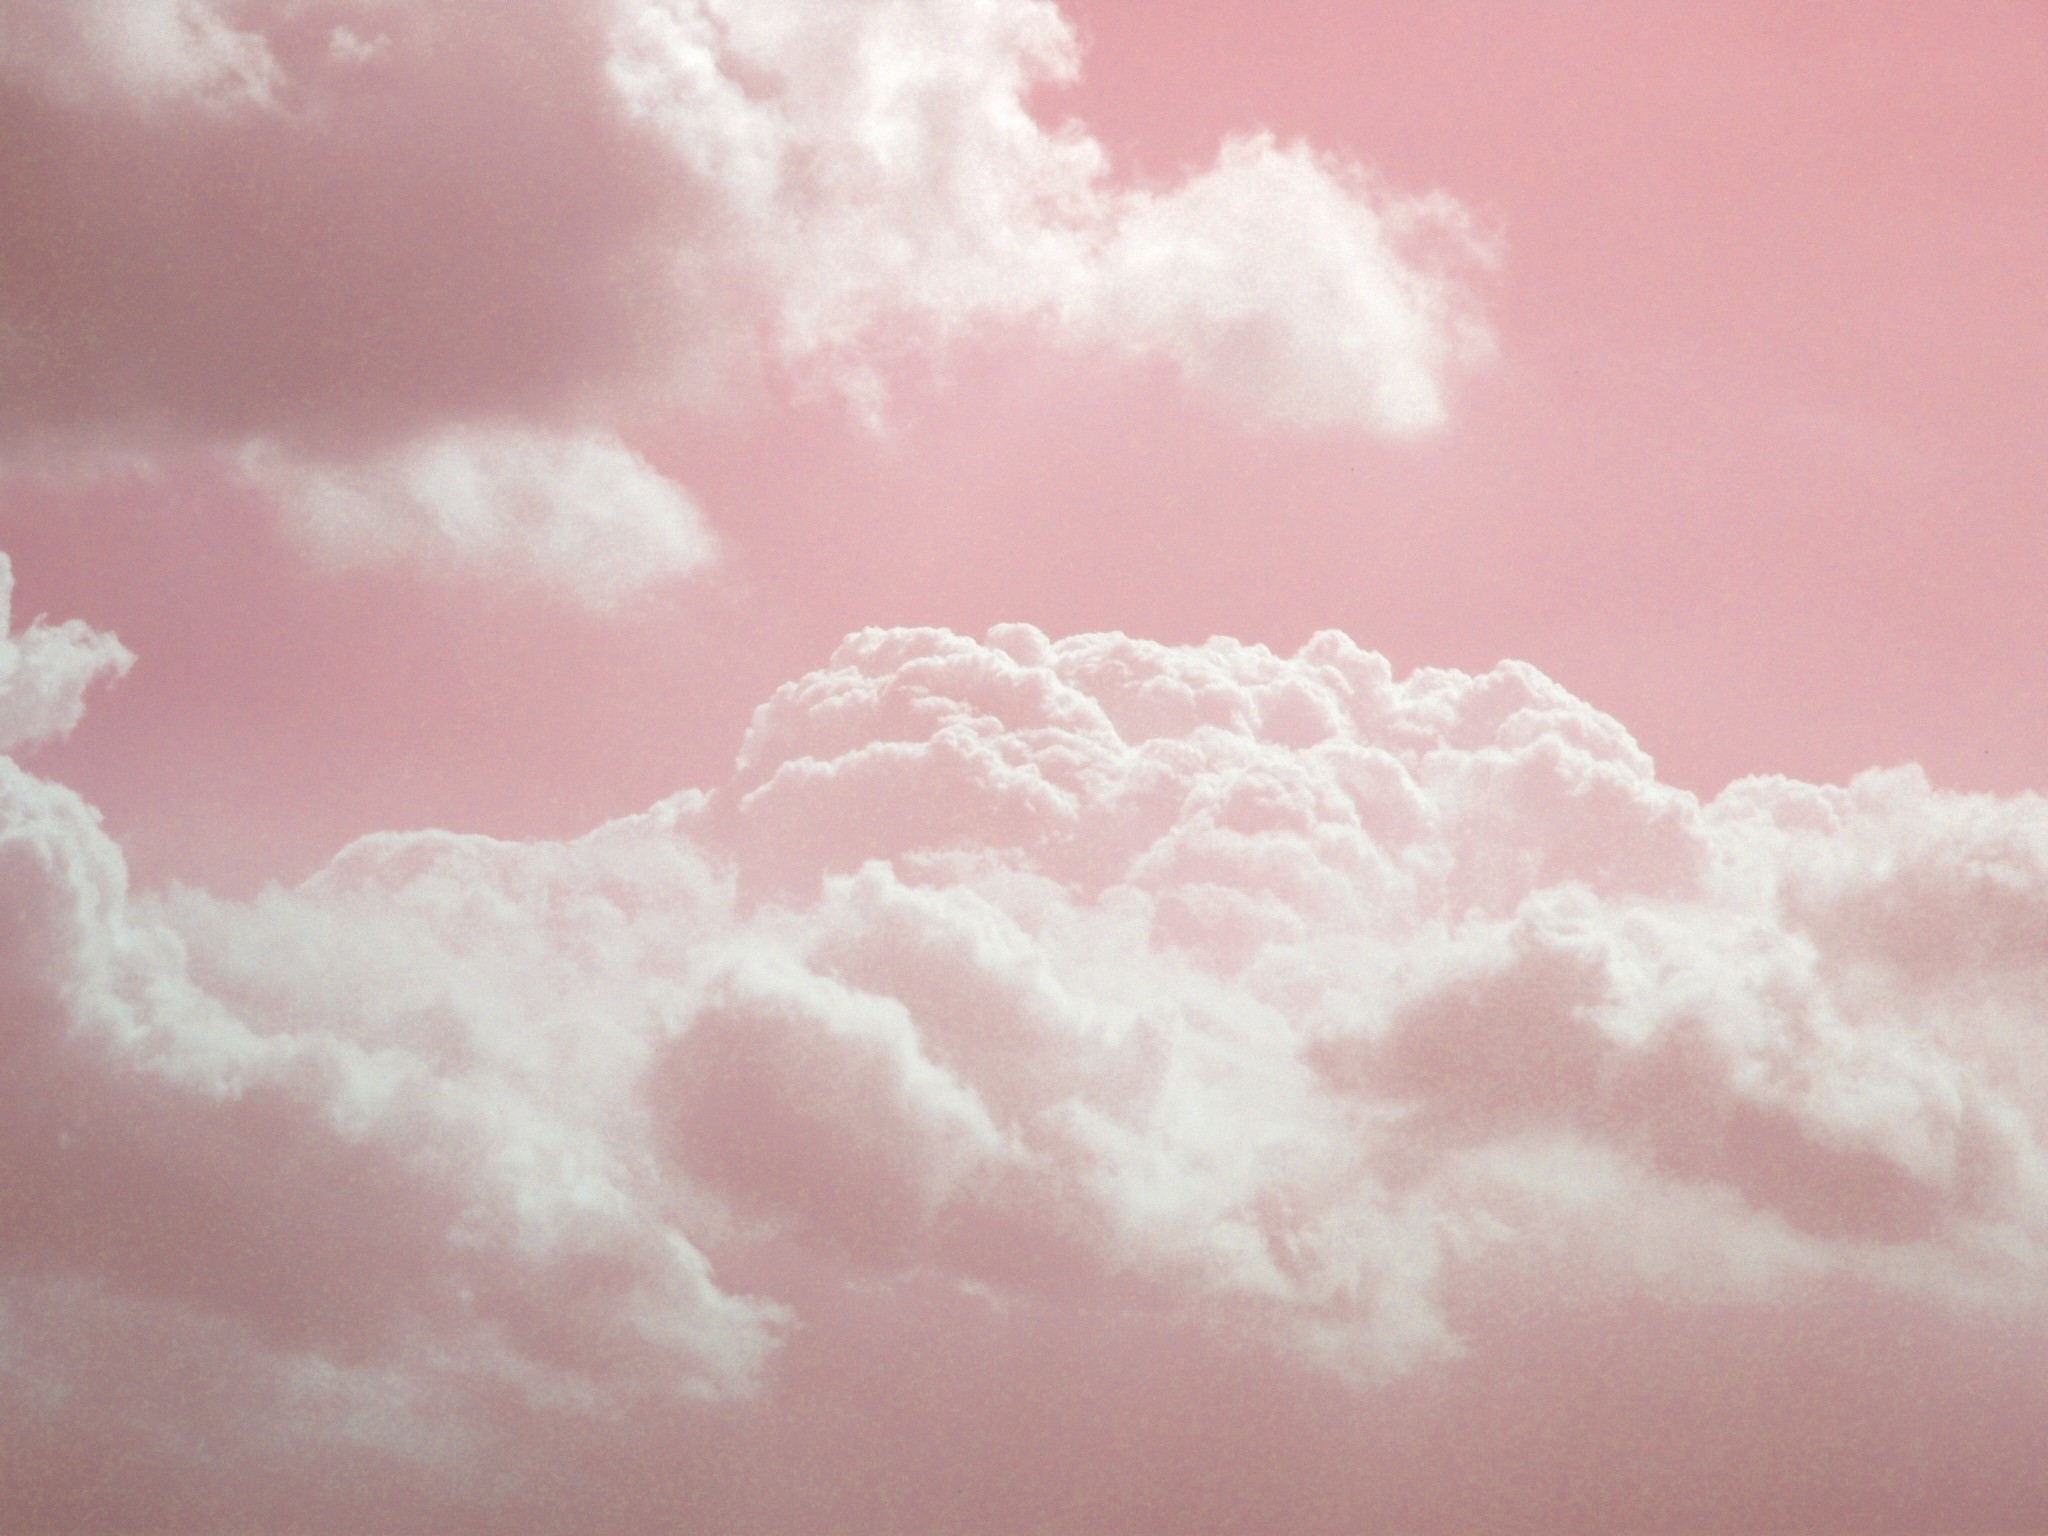 Pink background Tumblr ·① Download free amazing HD ...